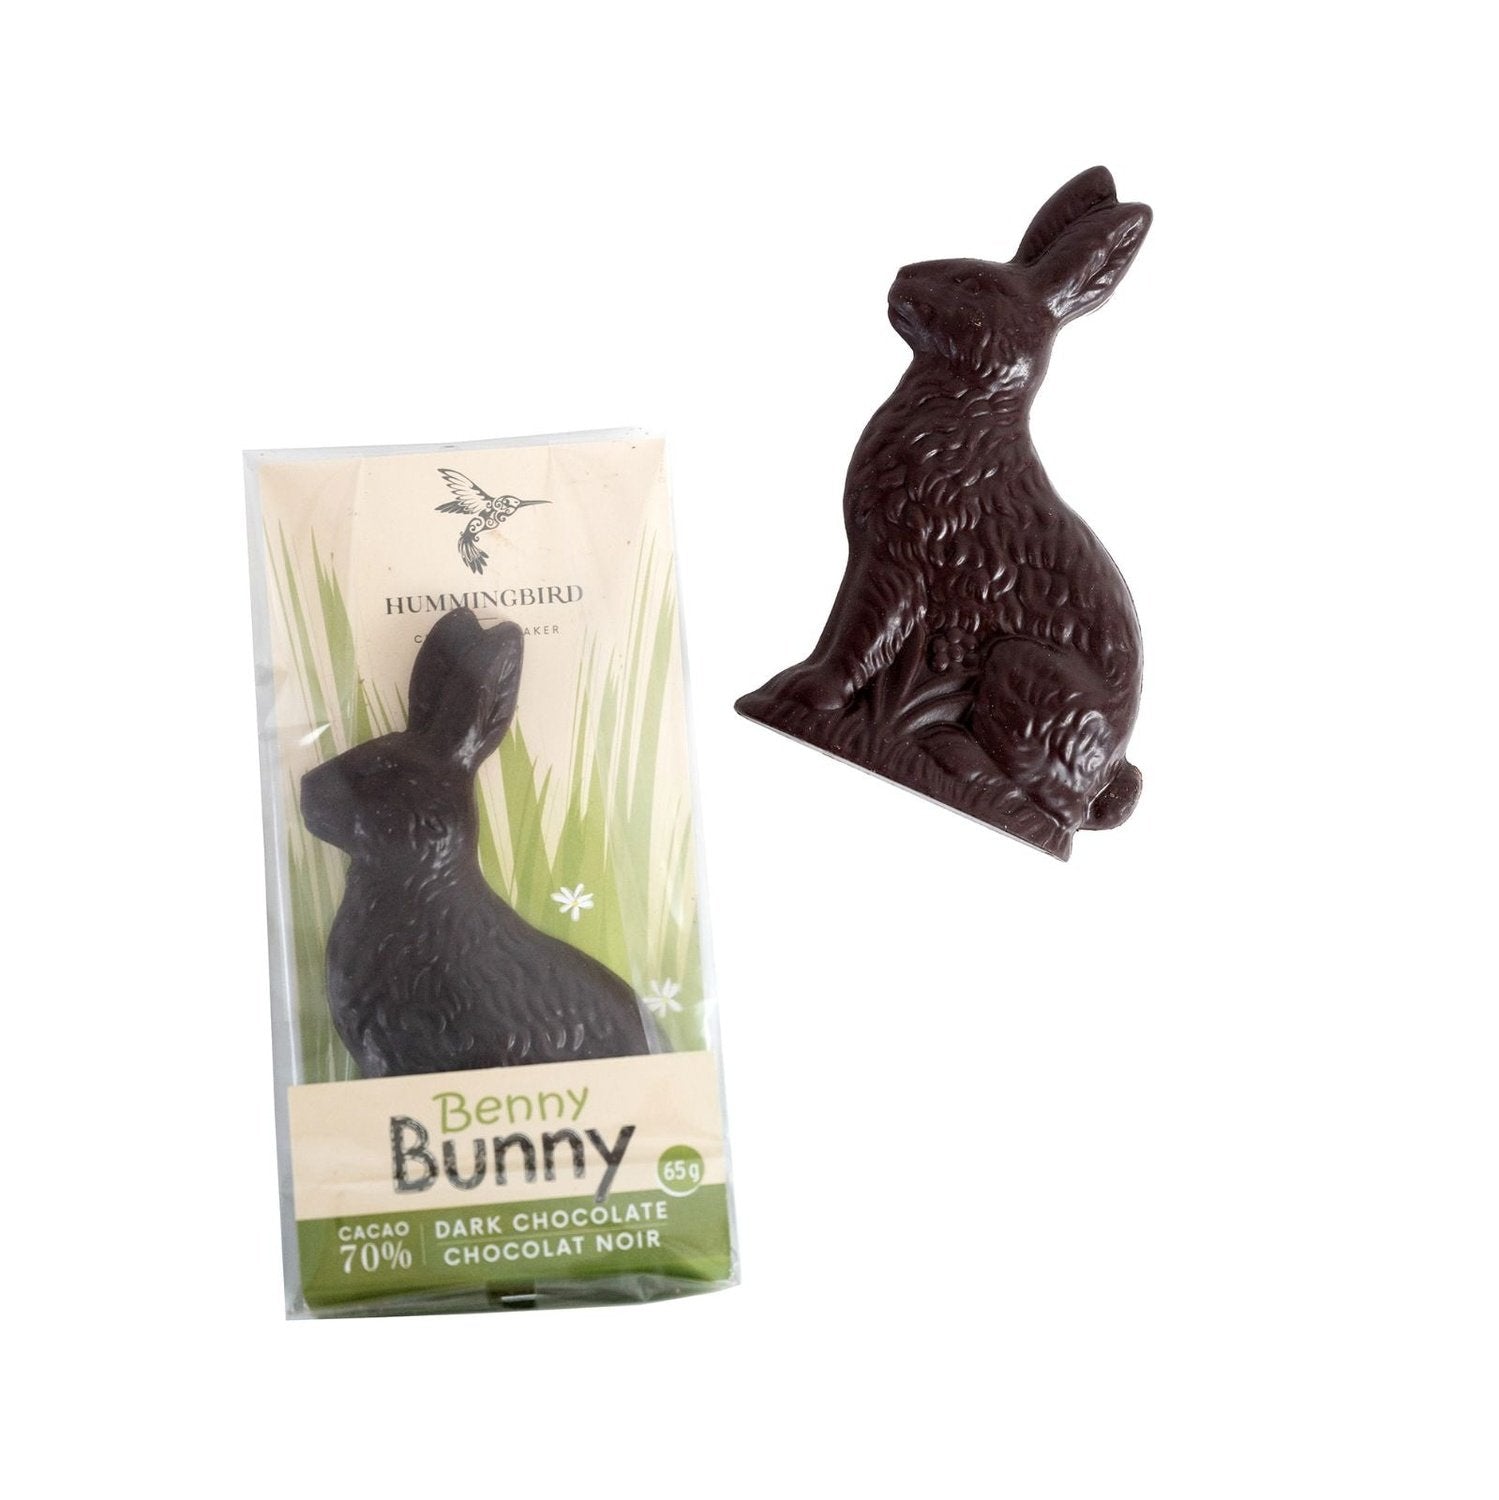 Two dark chocolate bunnies